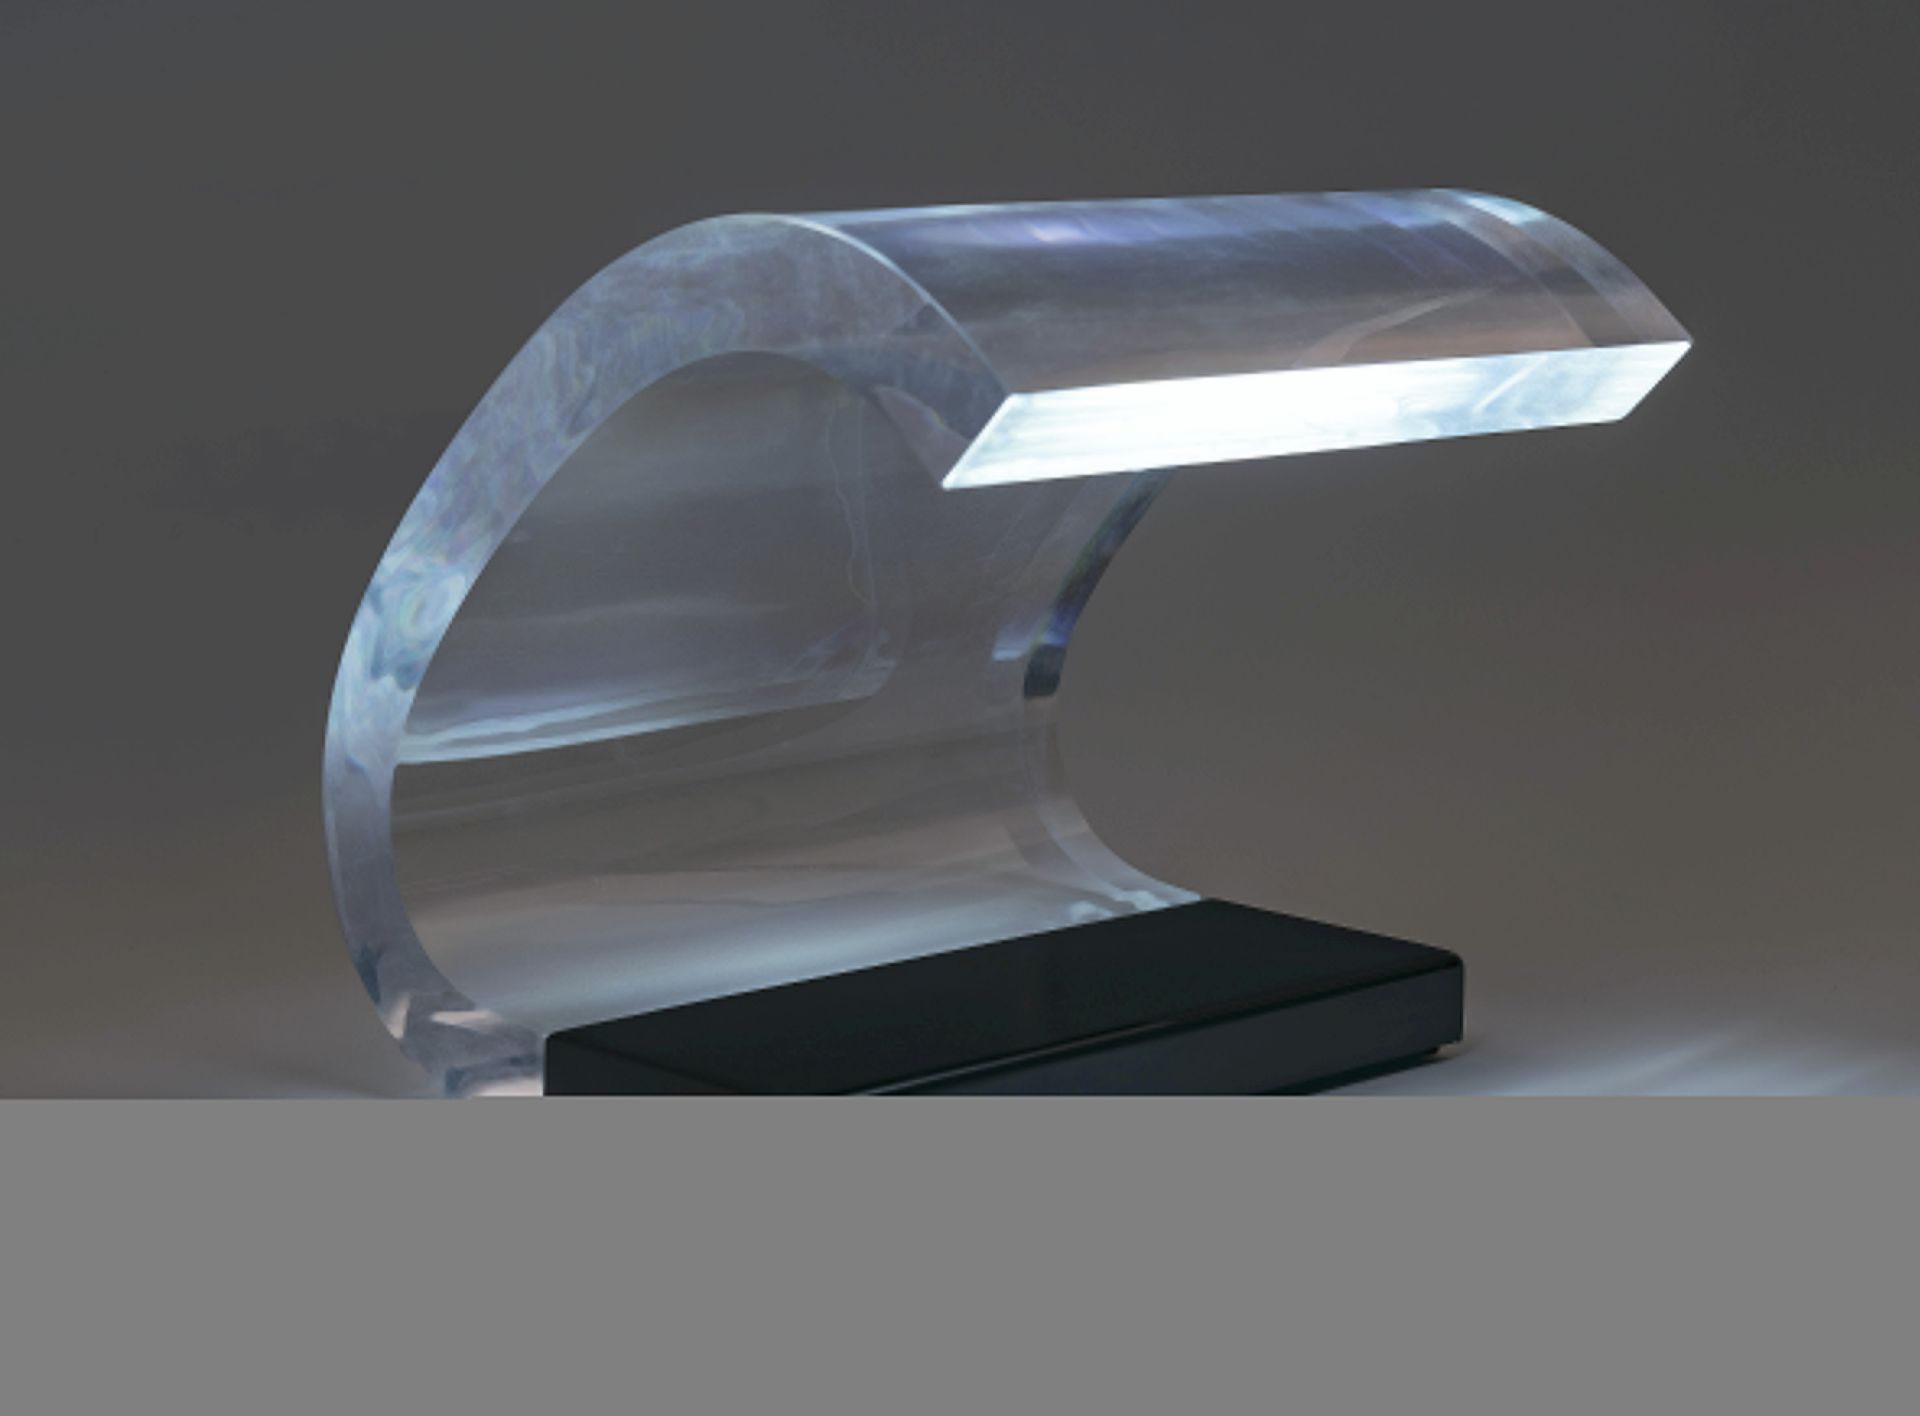 An ''Oluce Acrilica 281'' table lamp - Design by Gianni and Joe Colombo, 1962